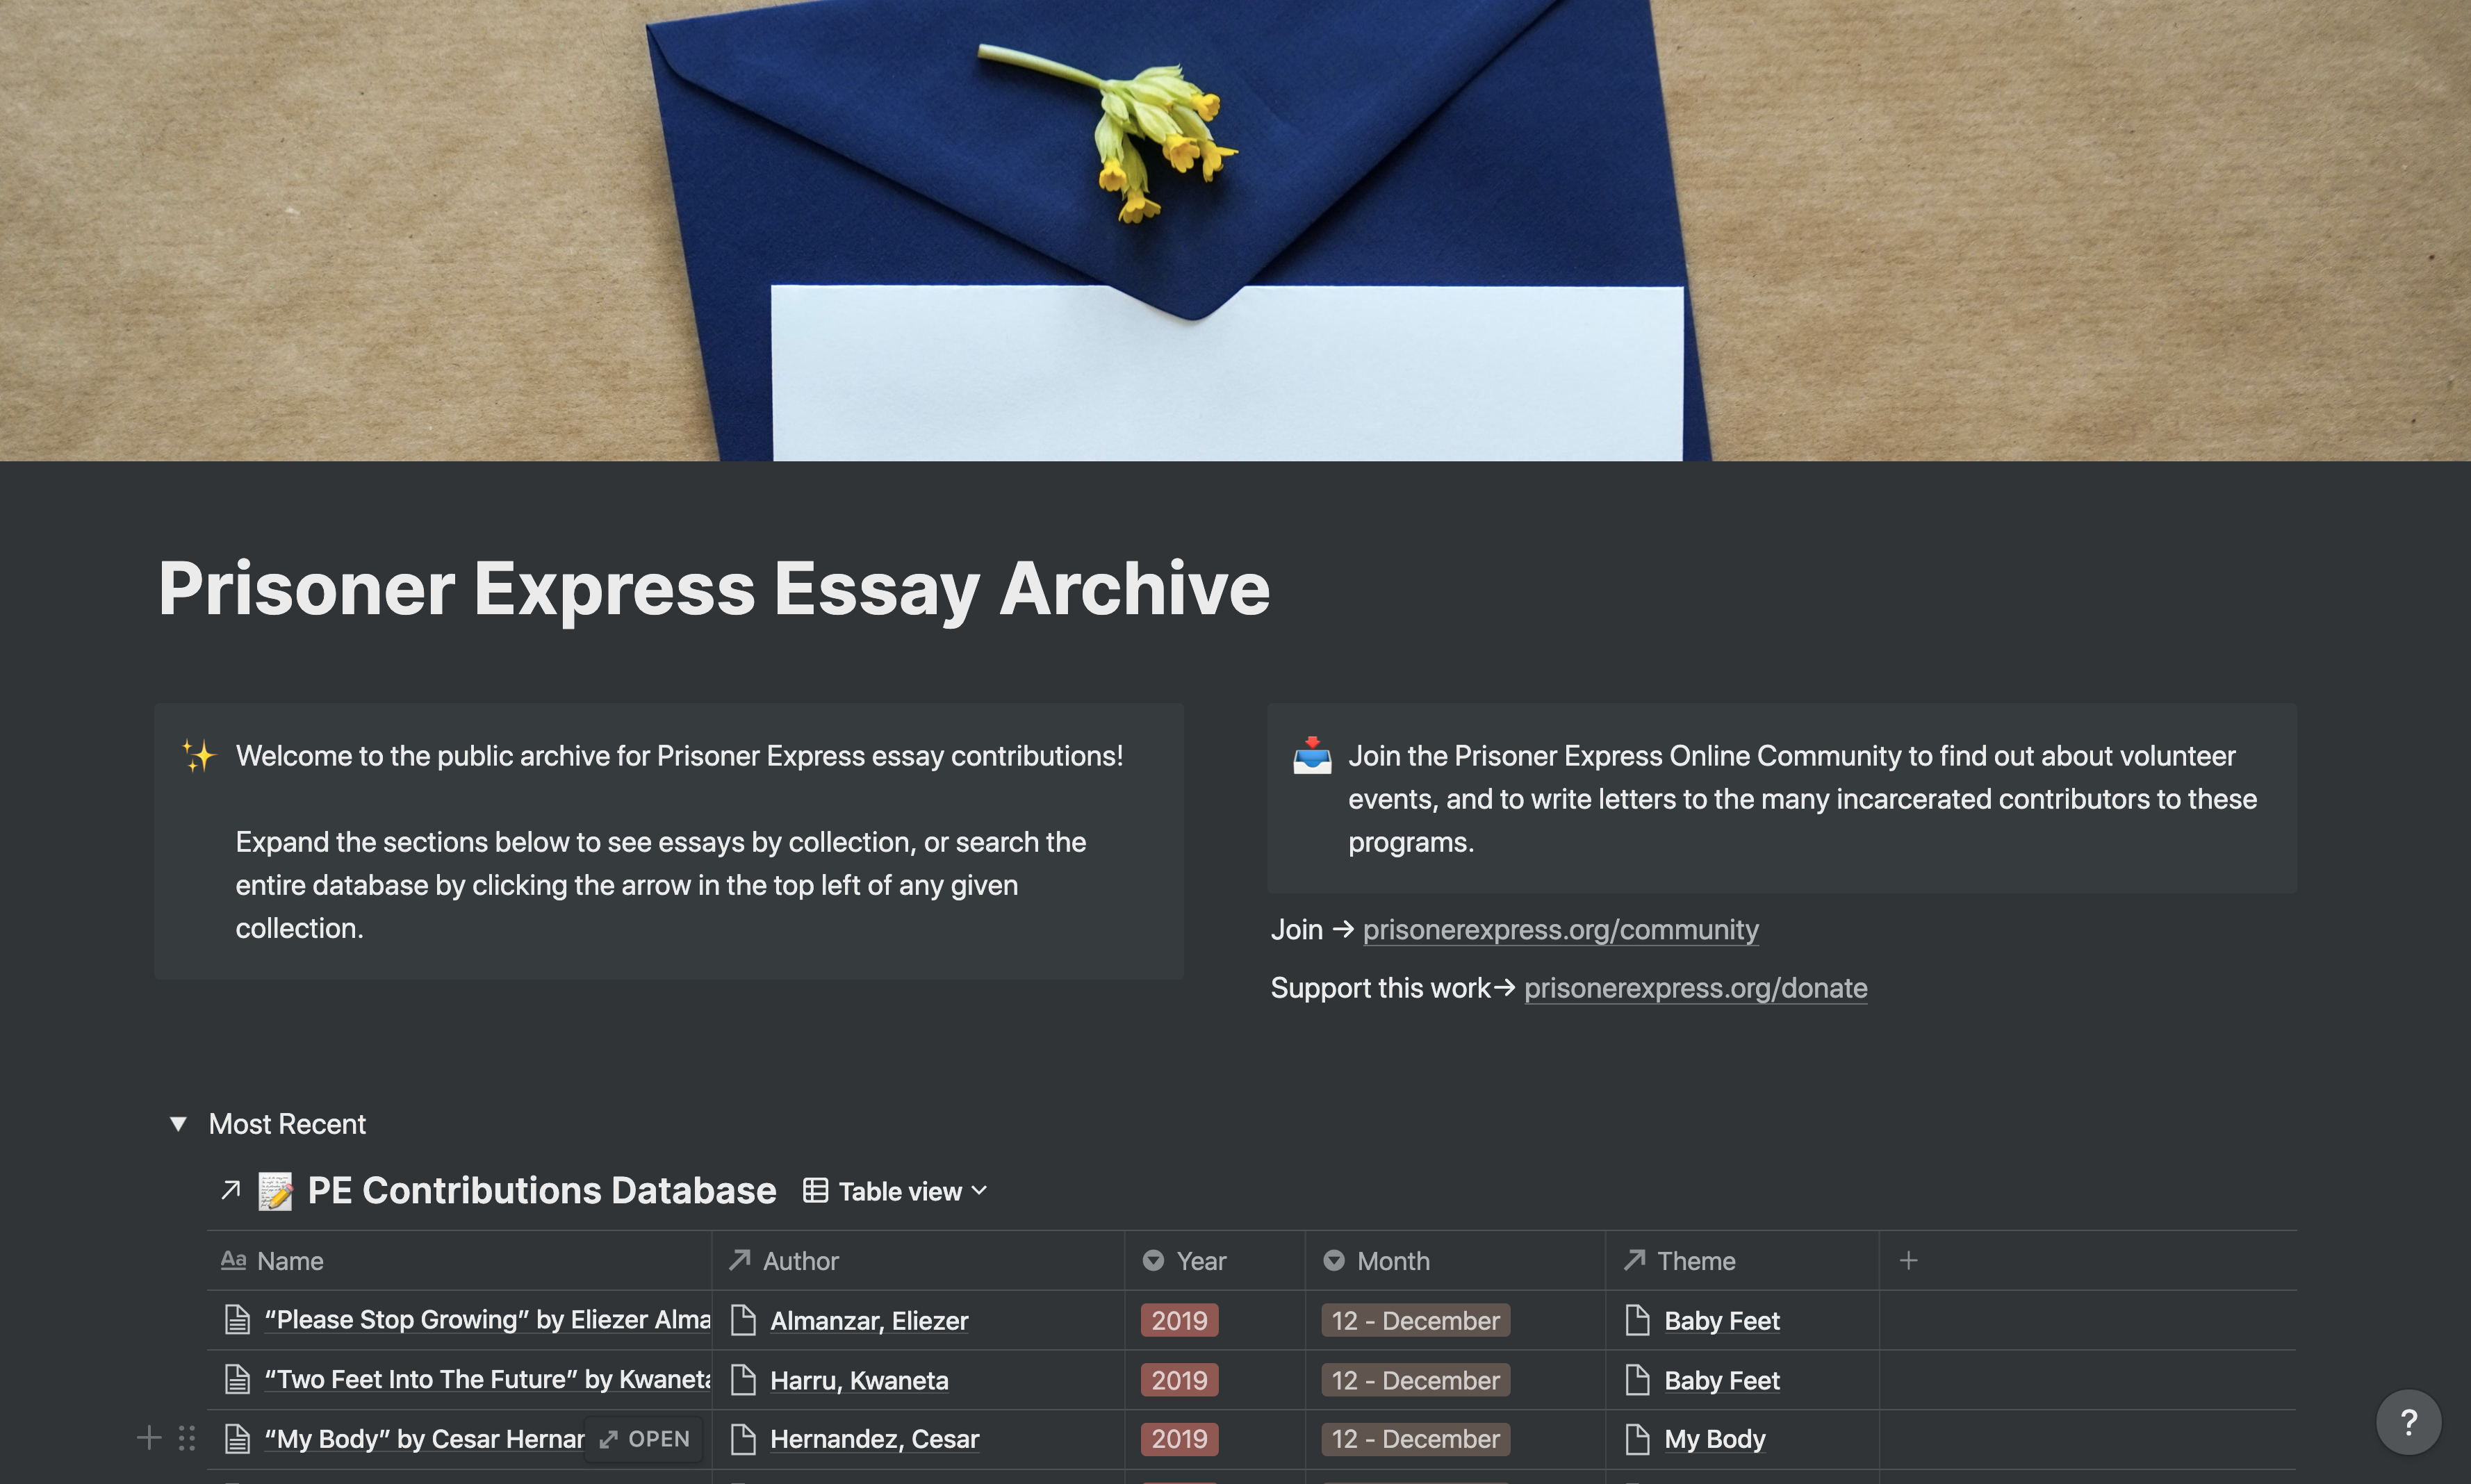 Essay Archive Screenshot